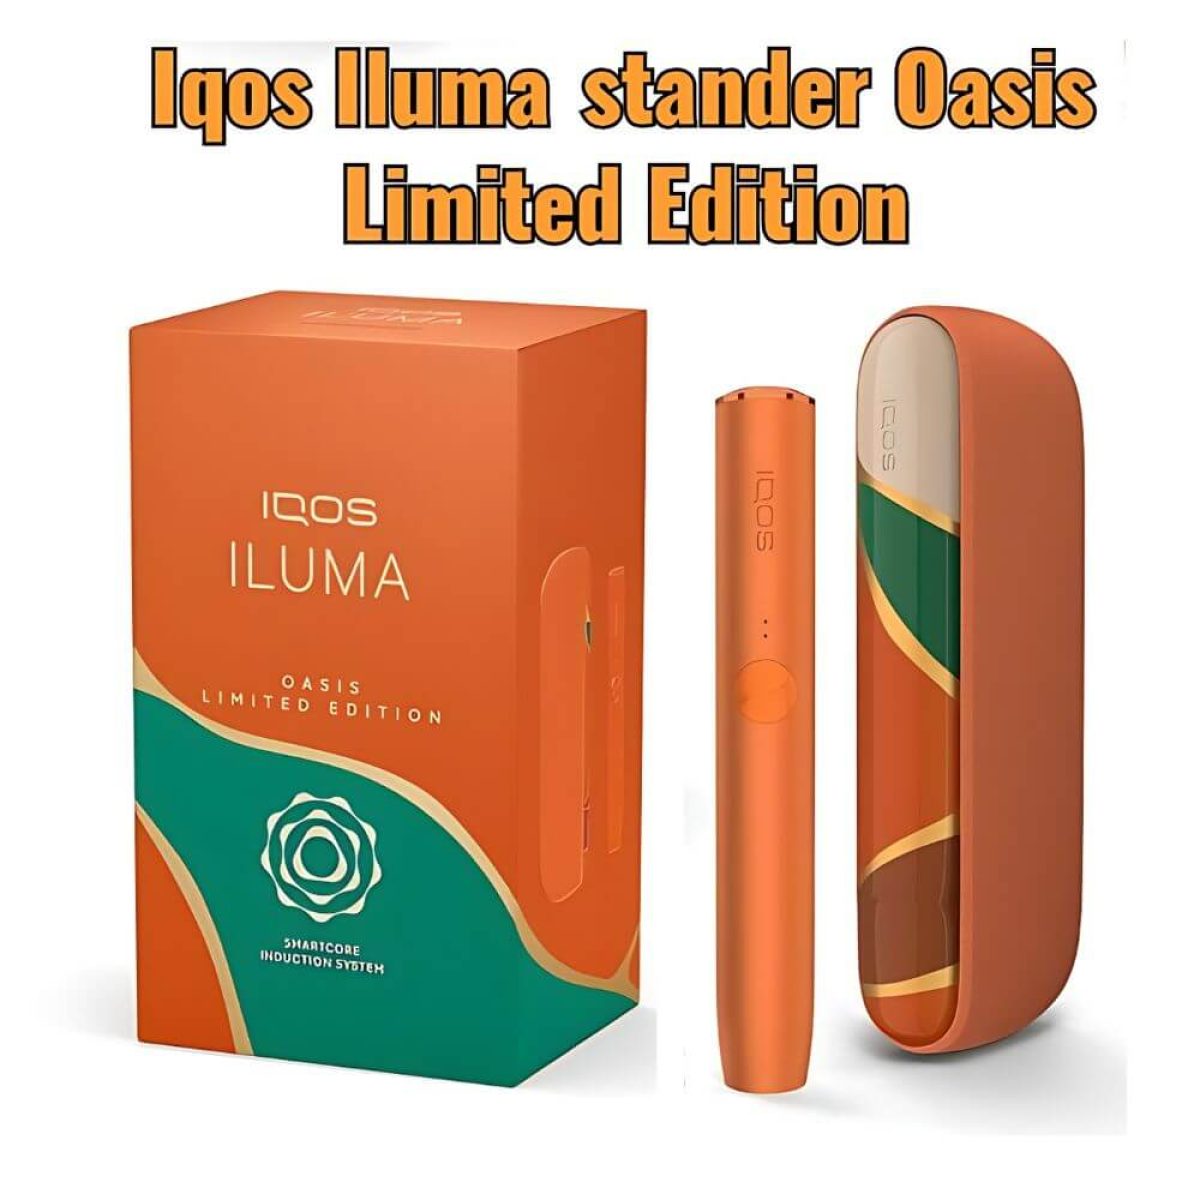 Buy Iqos Iluma Stander Oasis Limited Edition Device in Dubai, UAE